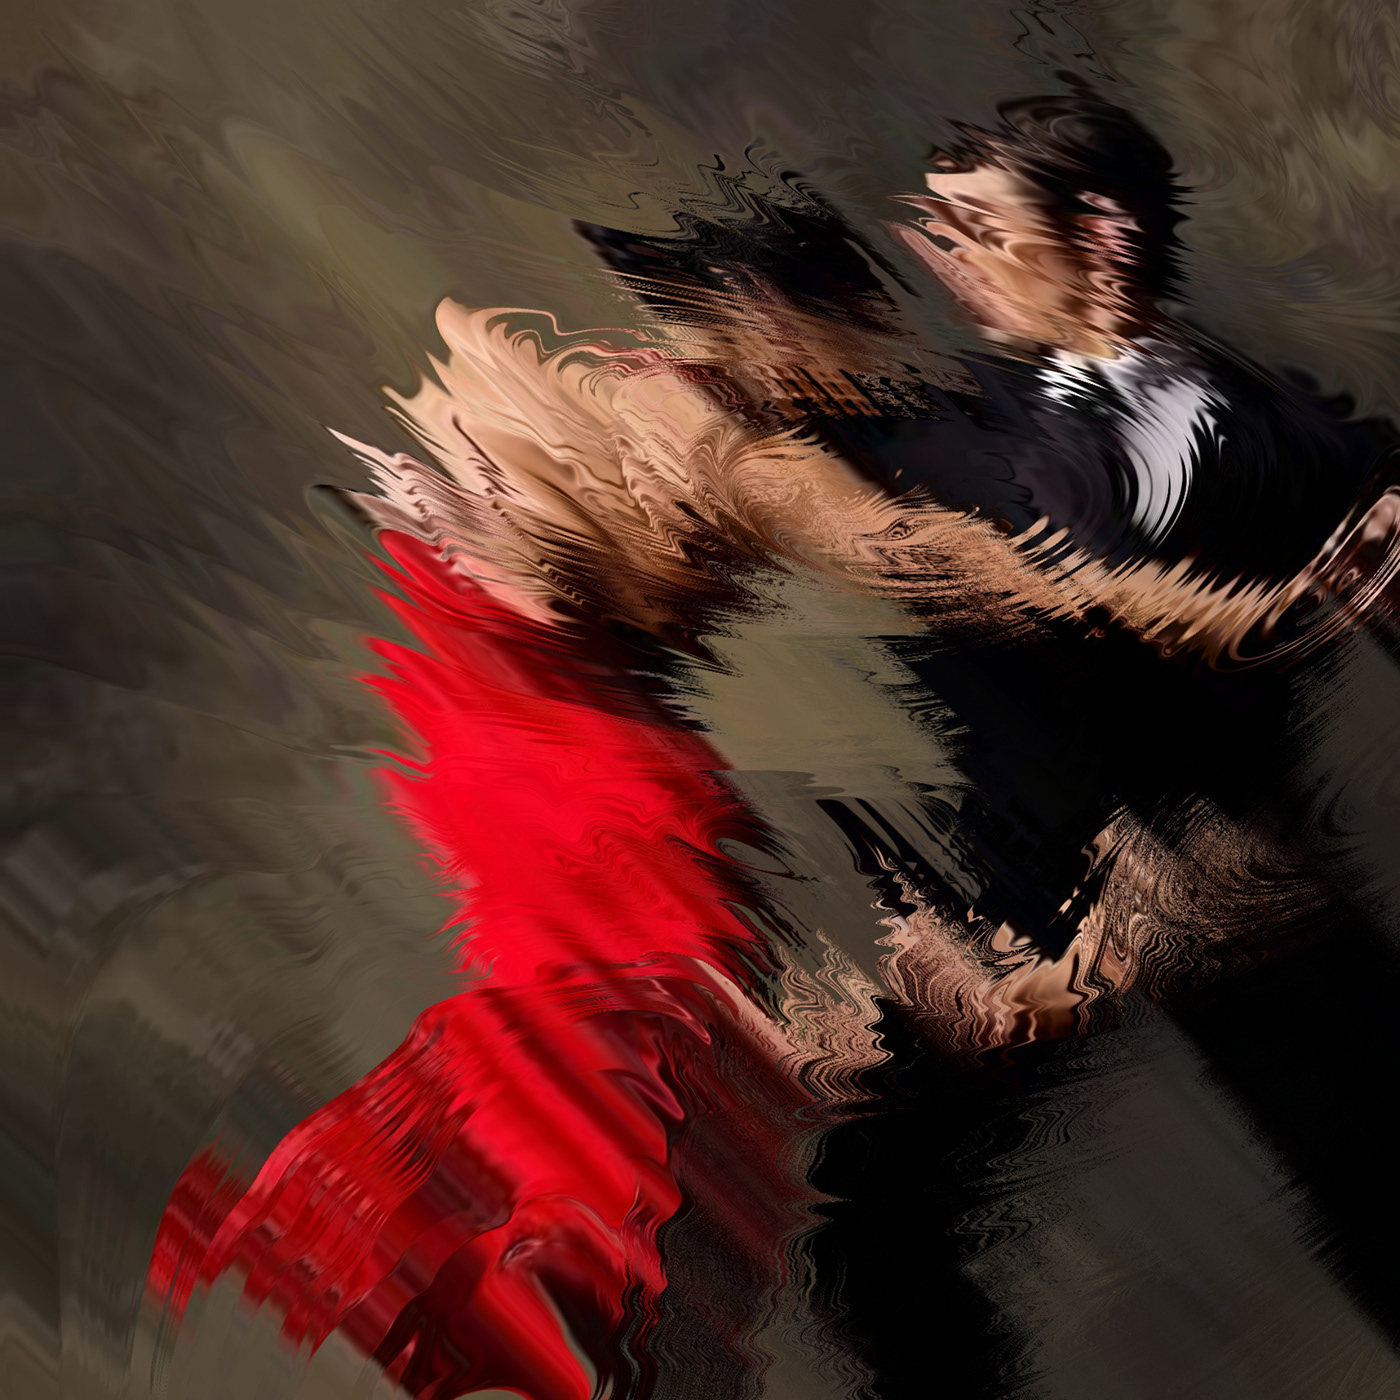 argentina buenosaires tango